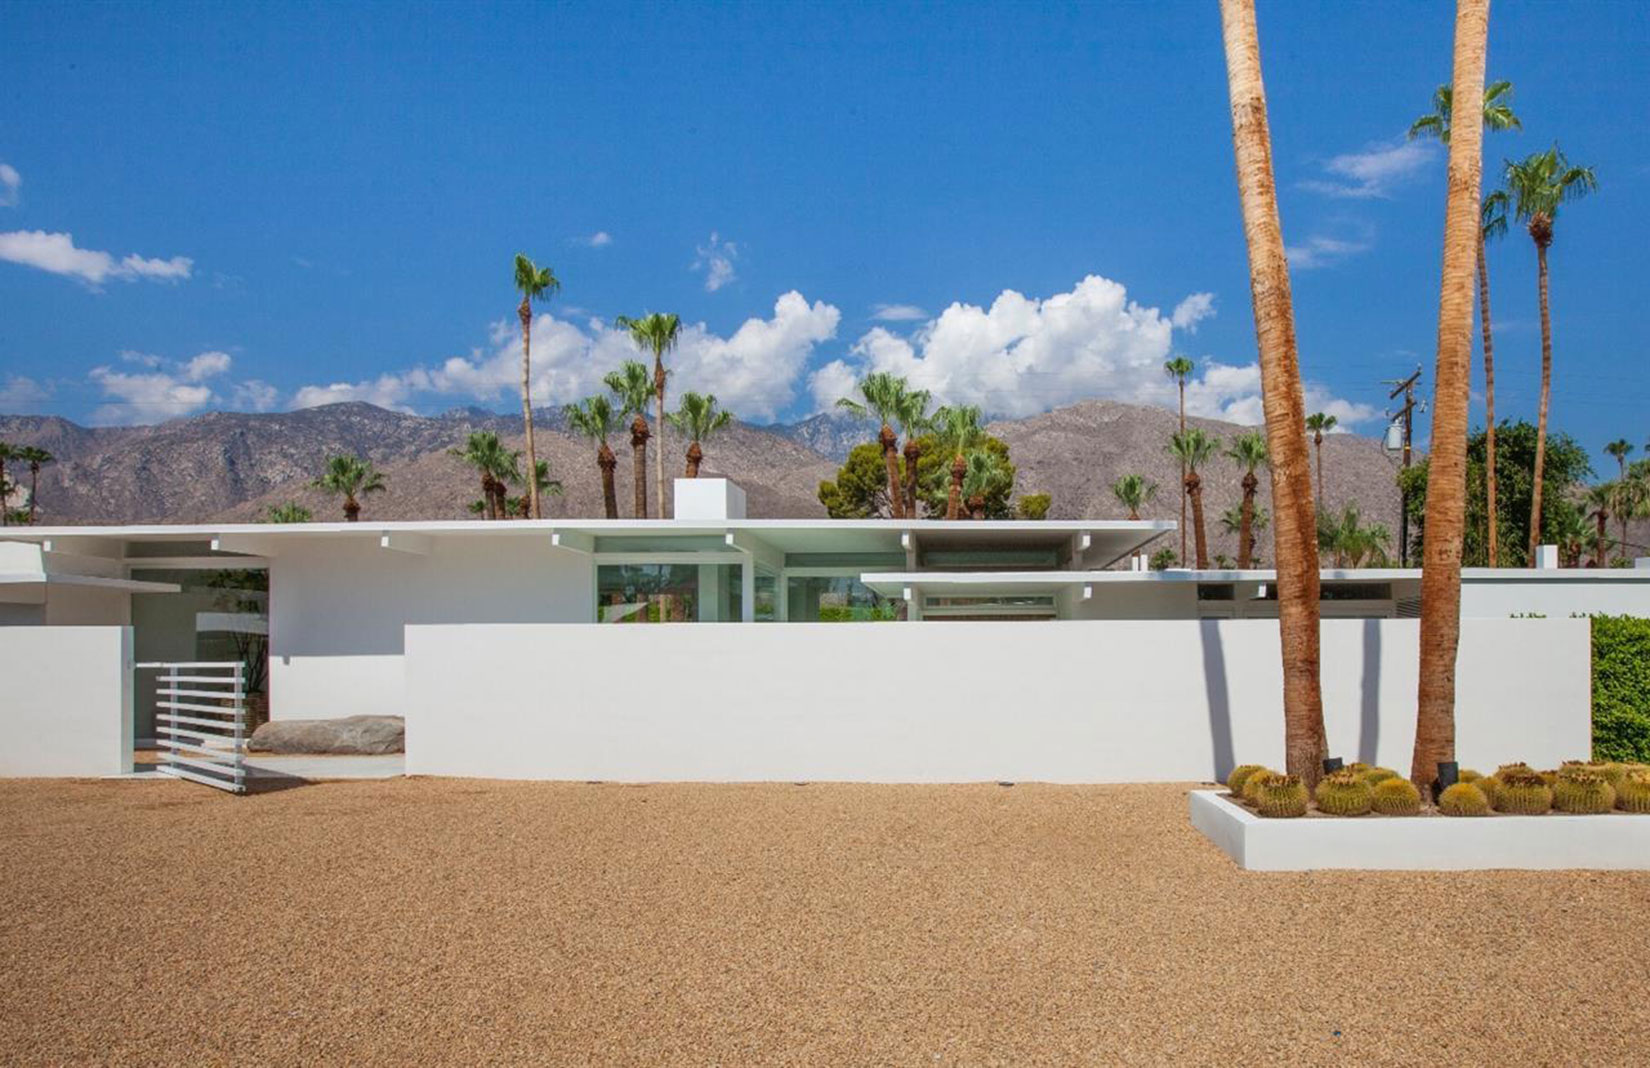 Audrey Hepburn's Palm Springs home